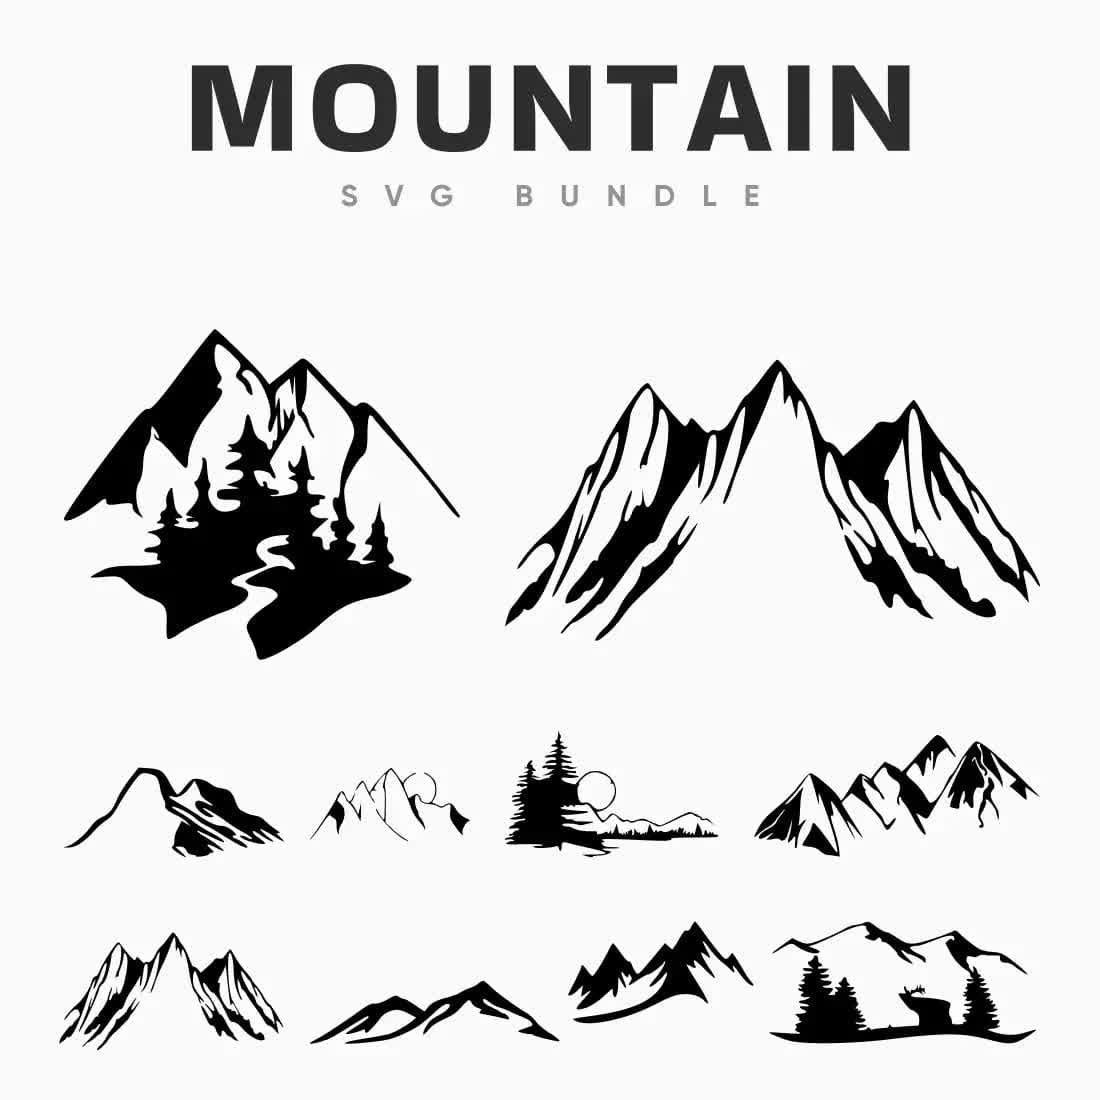 Mountain SVG Bundle Preview 4.